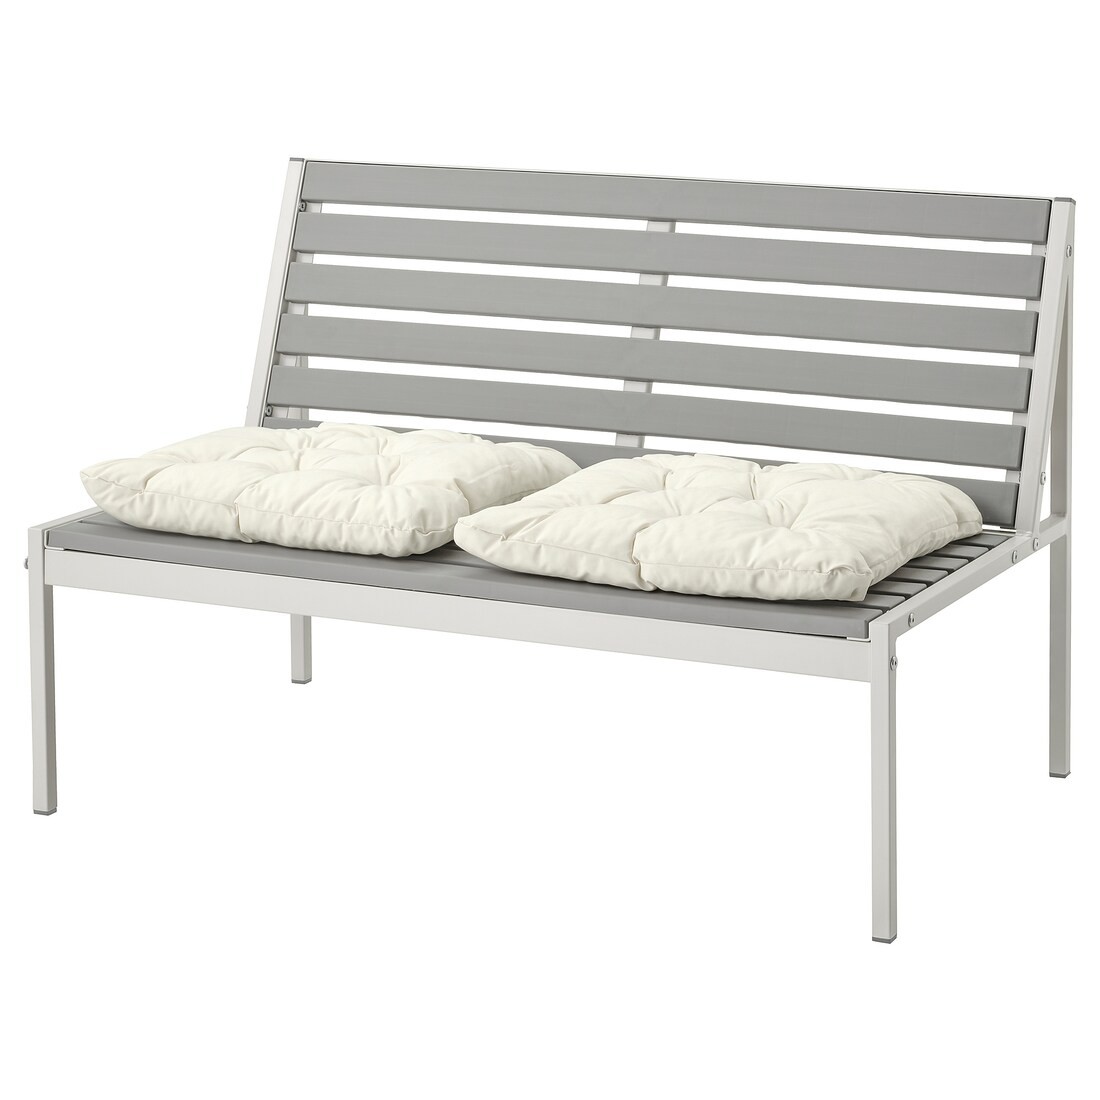 IKEA JOLPEN ДЖОЛПЕН 2-местный диван, для улицы, белый / серый / Kuddarna бежевый 19495063 194.950.63